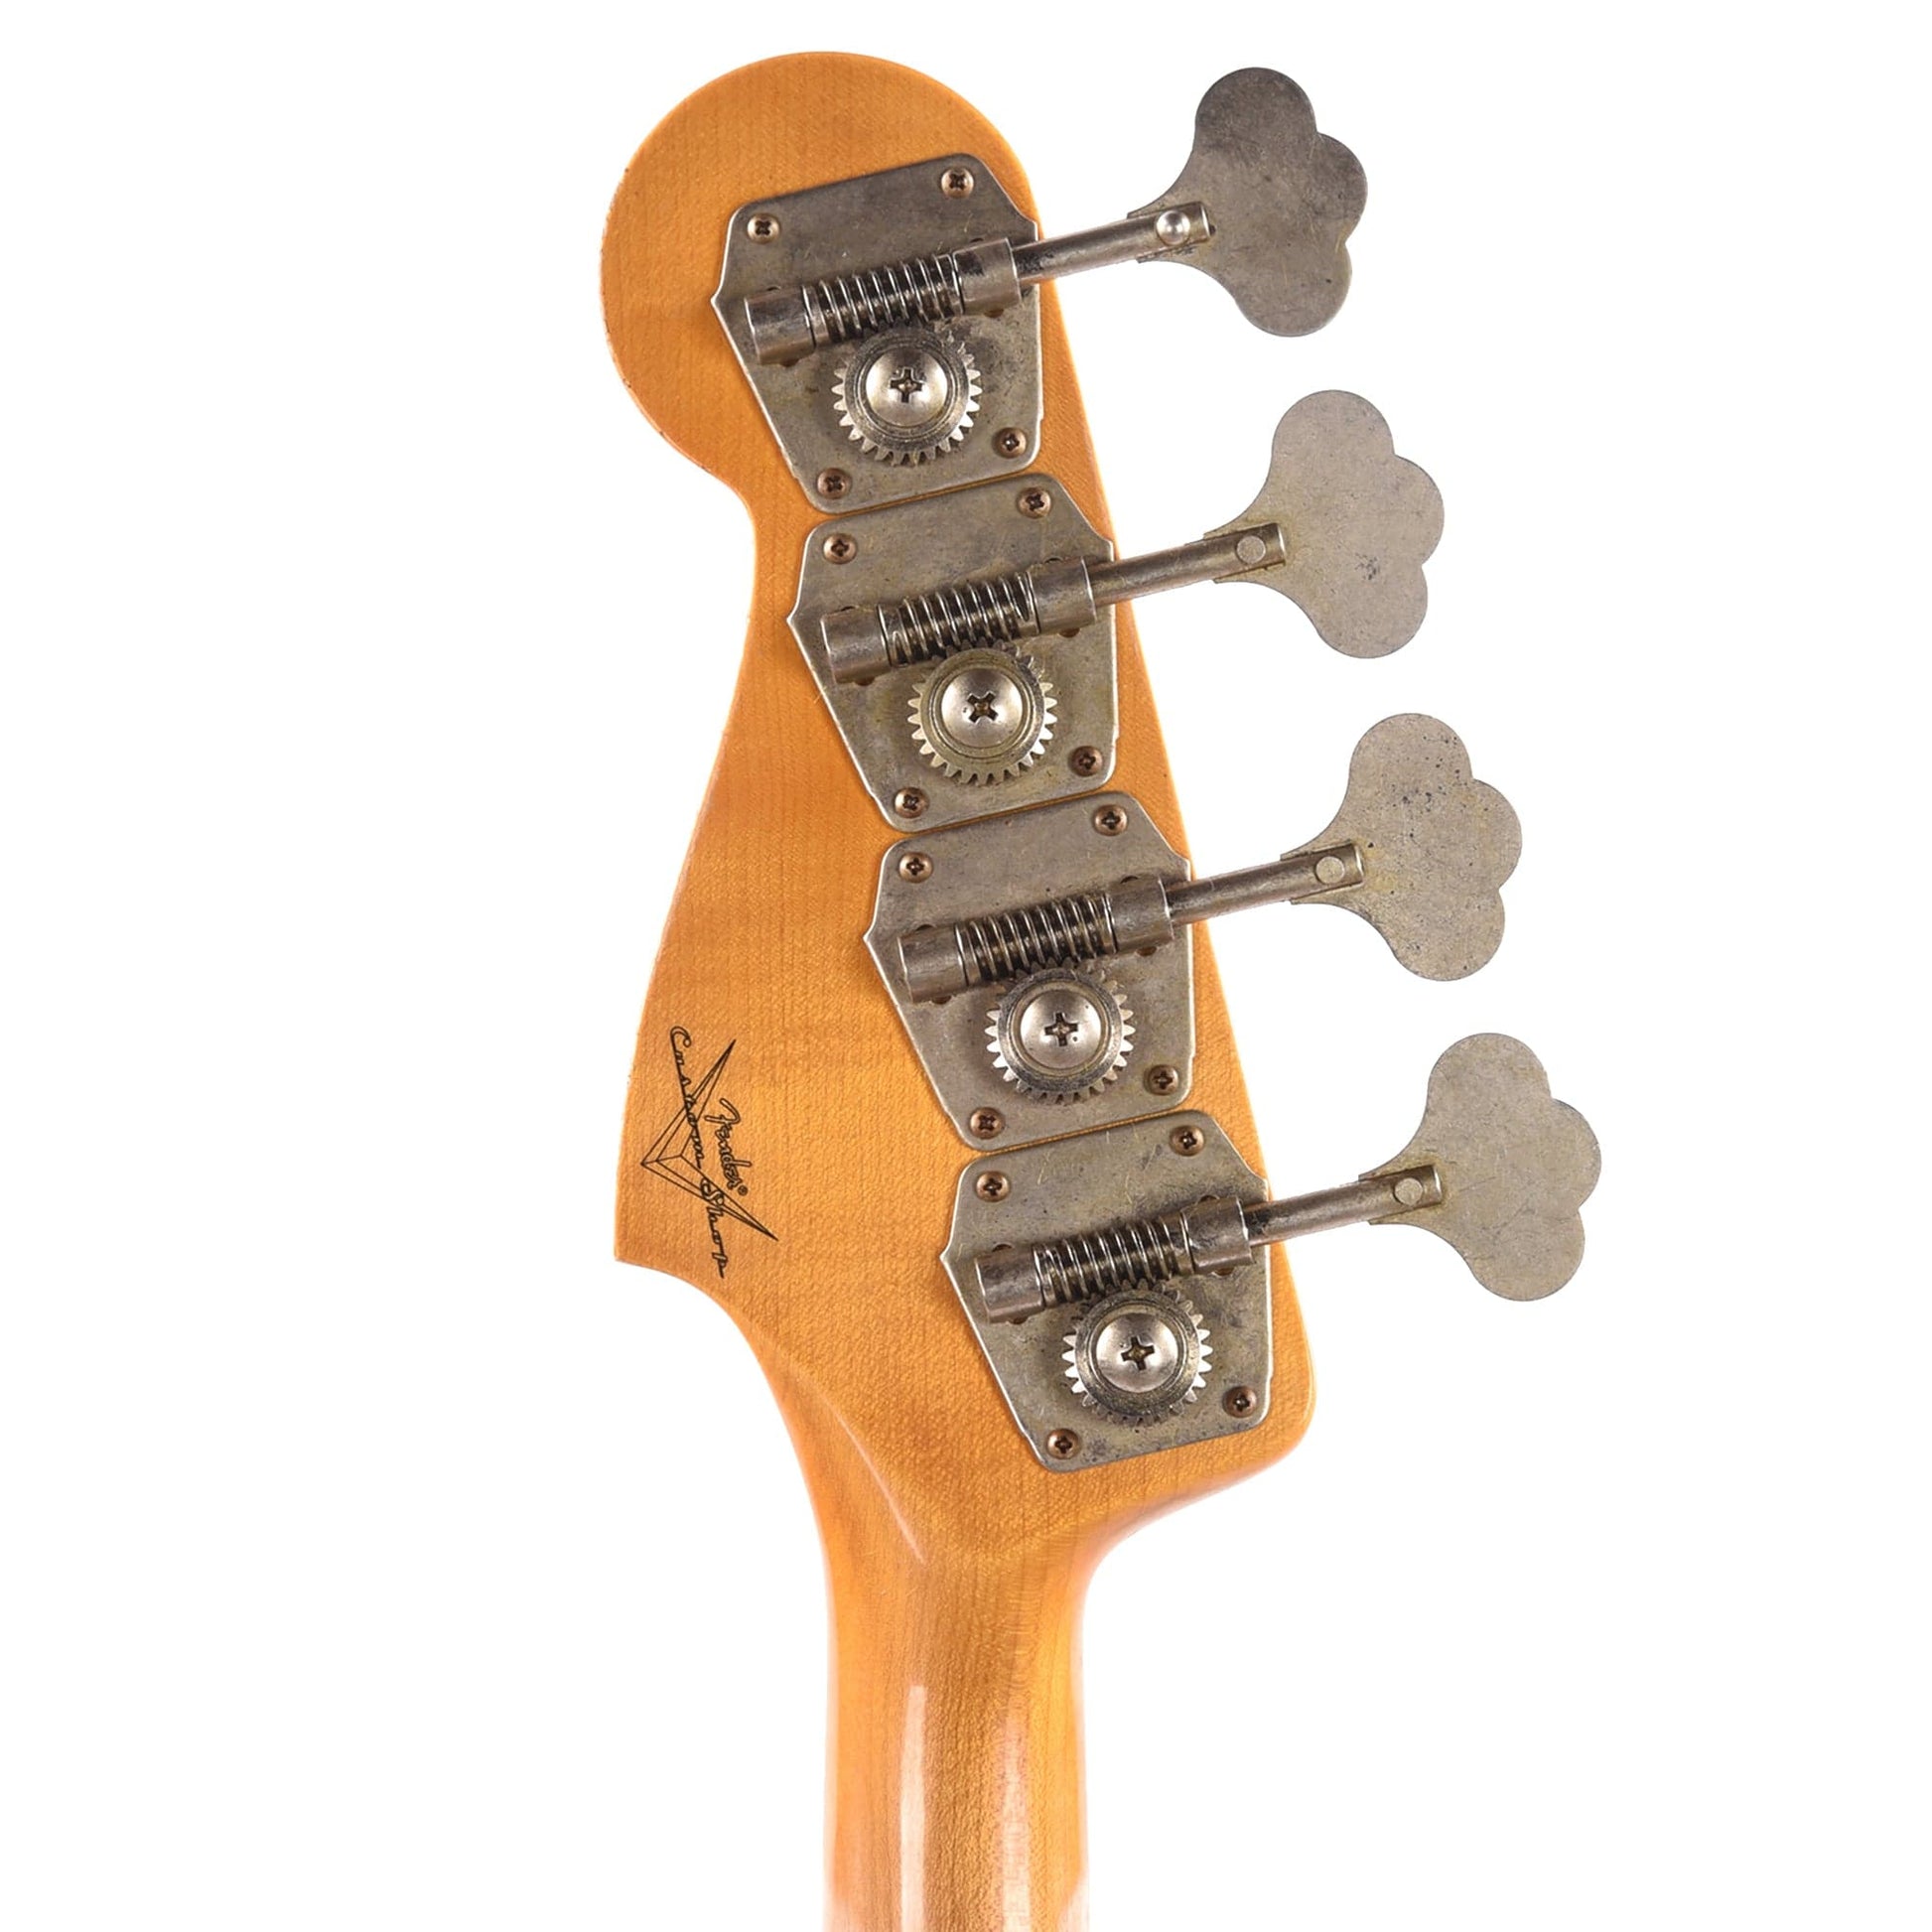 Fender Custom Shop 1960 Jazz Bass Heavy Relic Super Dirty/Super Aged Dakota Red w/Painted Headcap Bass Guitars / 4-String